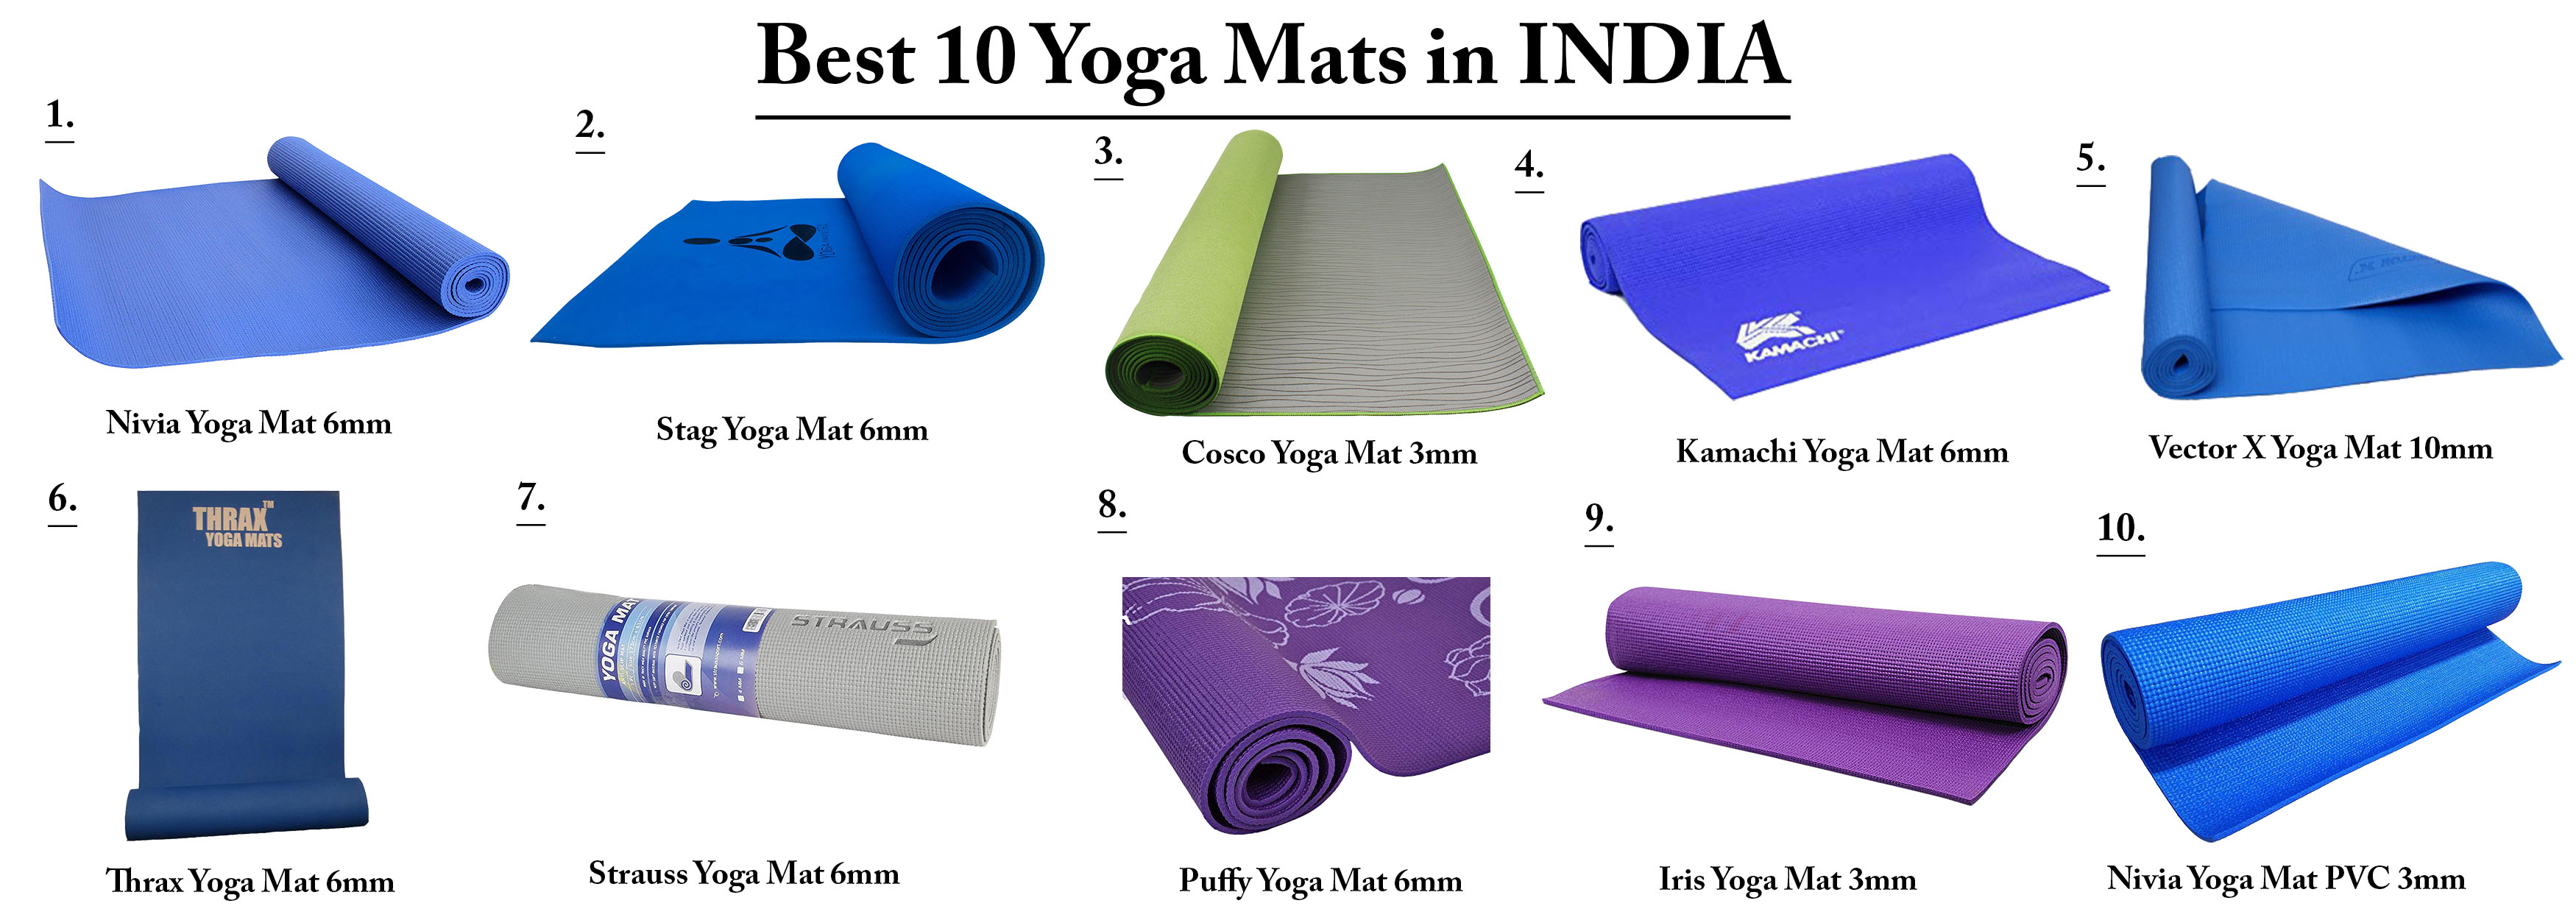 Best_10_Yoga_Mats_in_INDIA.jpg